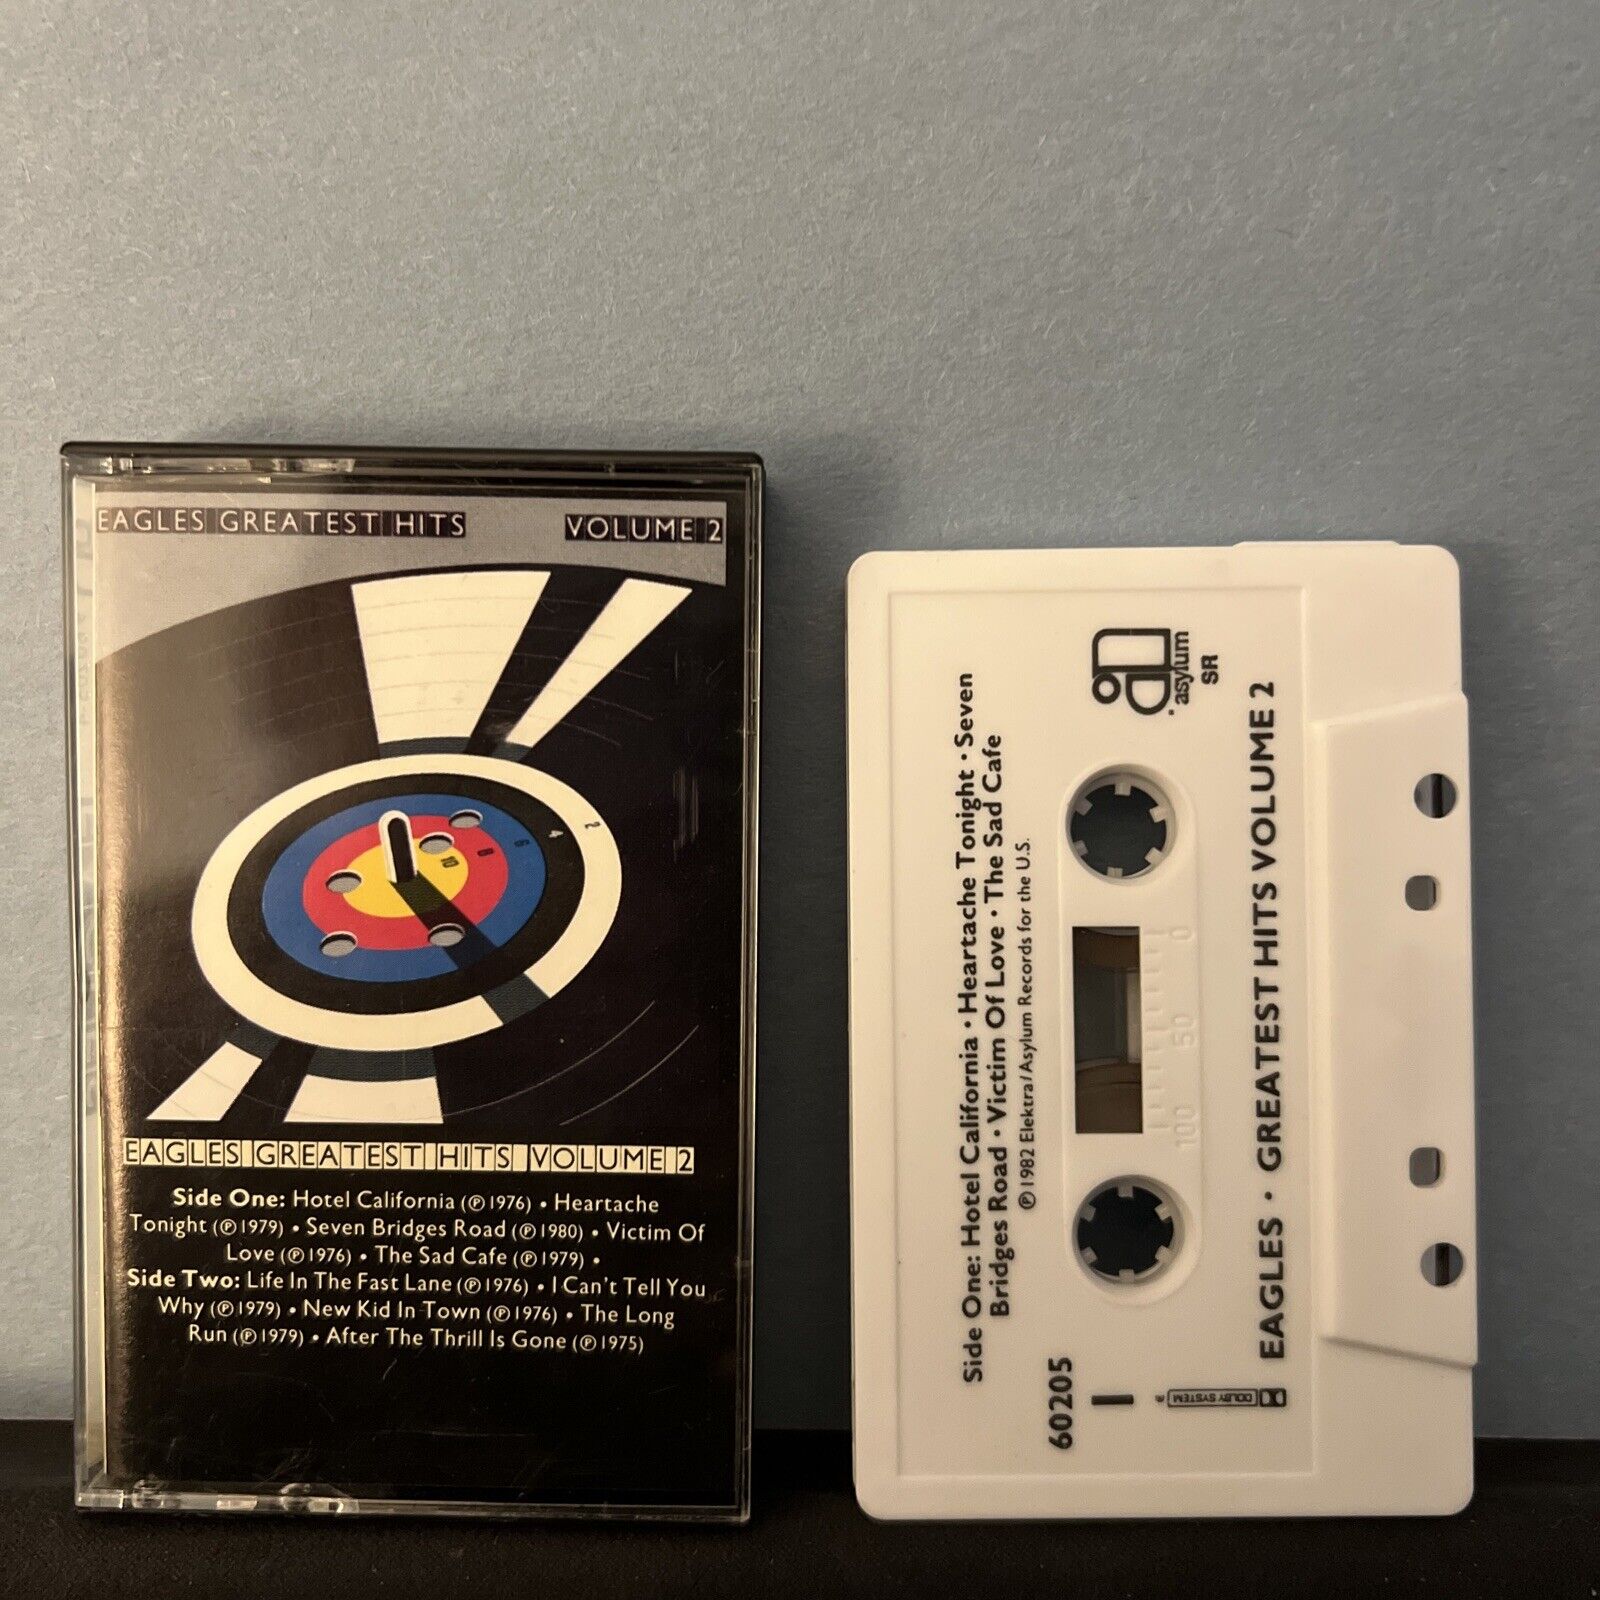 Vintage 1982 Eagles Greatest Hits Volume 2 Cassette Tape